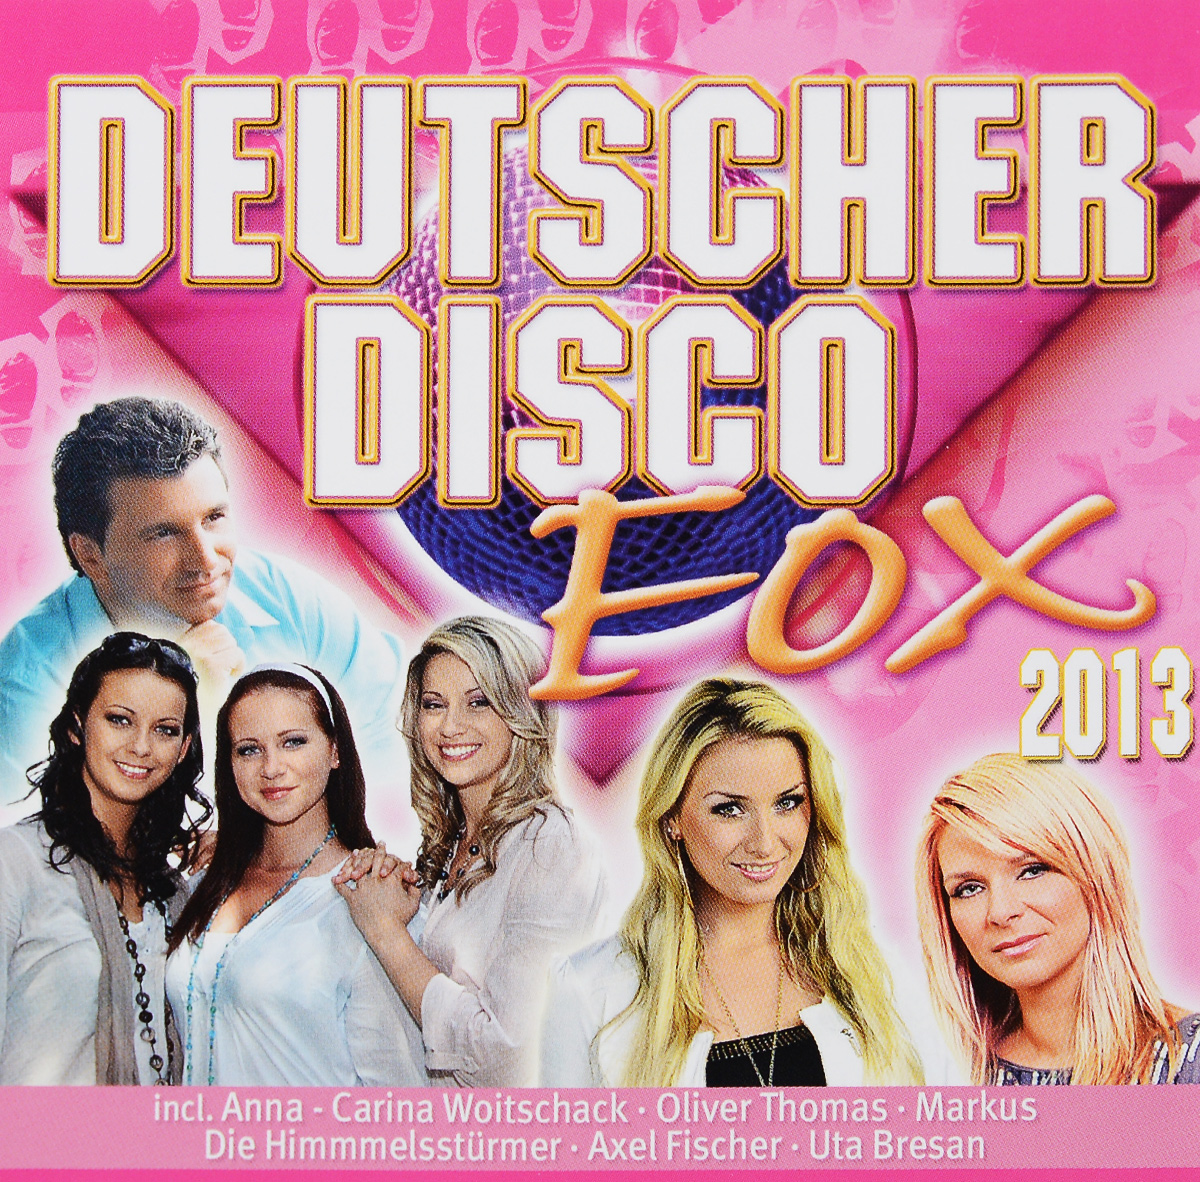 Deutscher Disco Fox 2013 (2 CD)